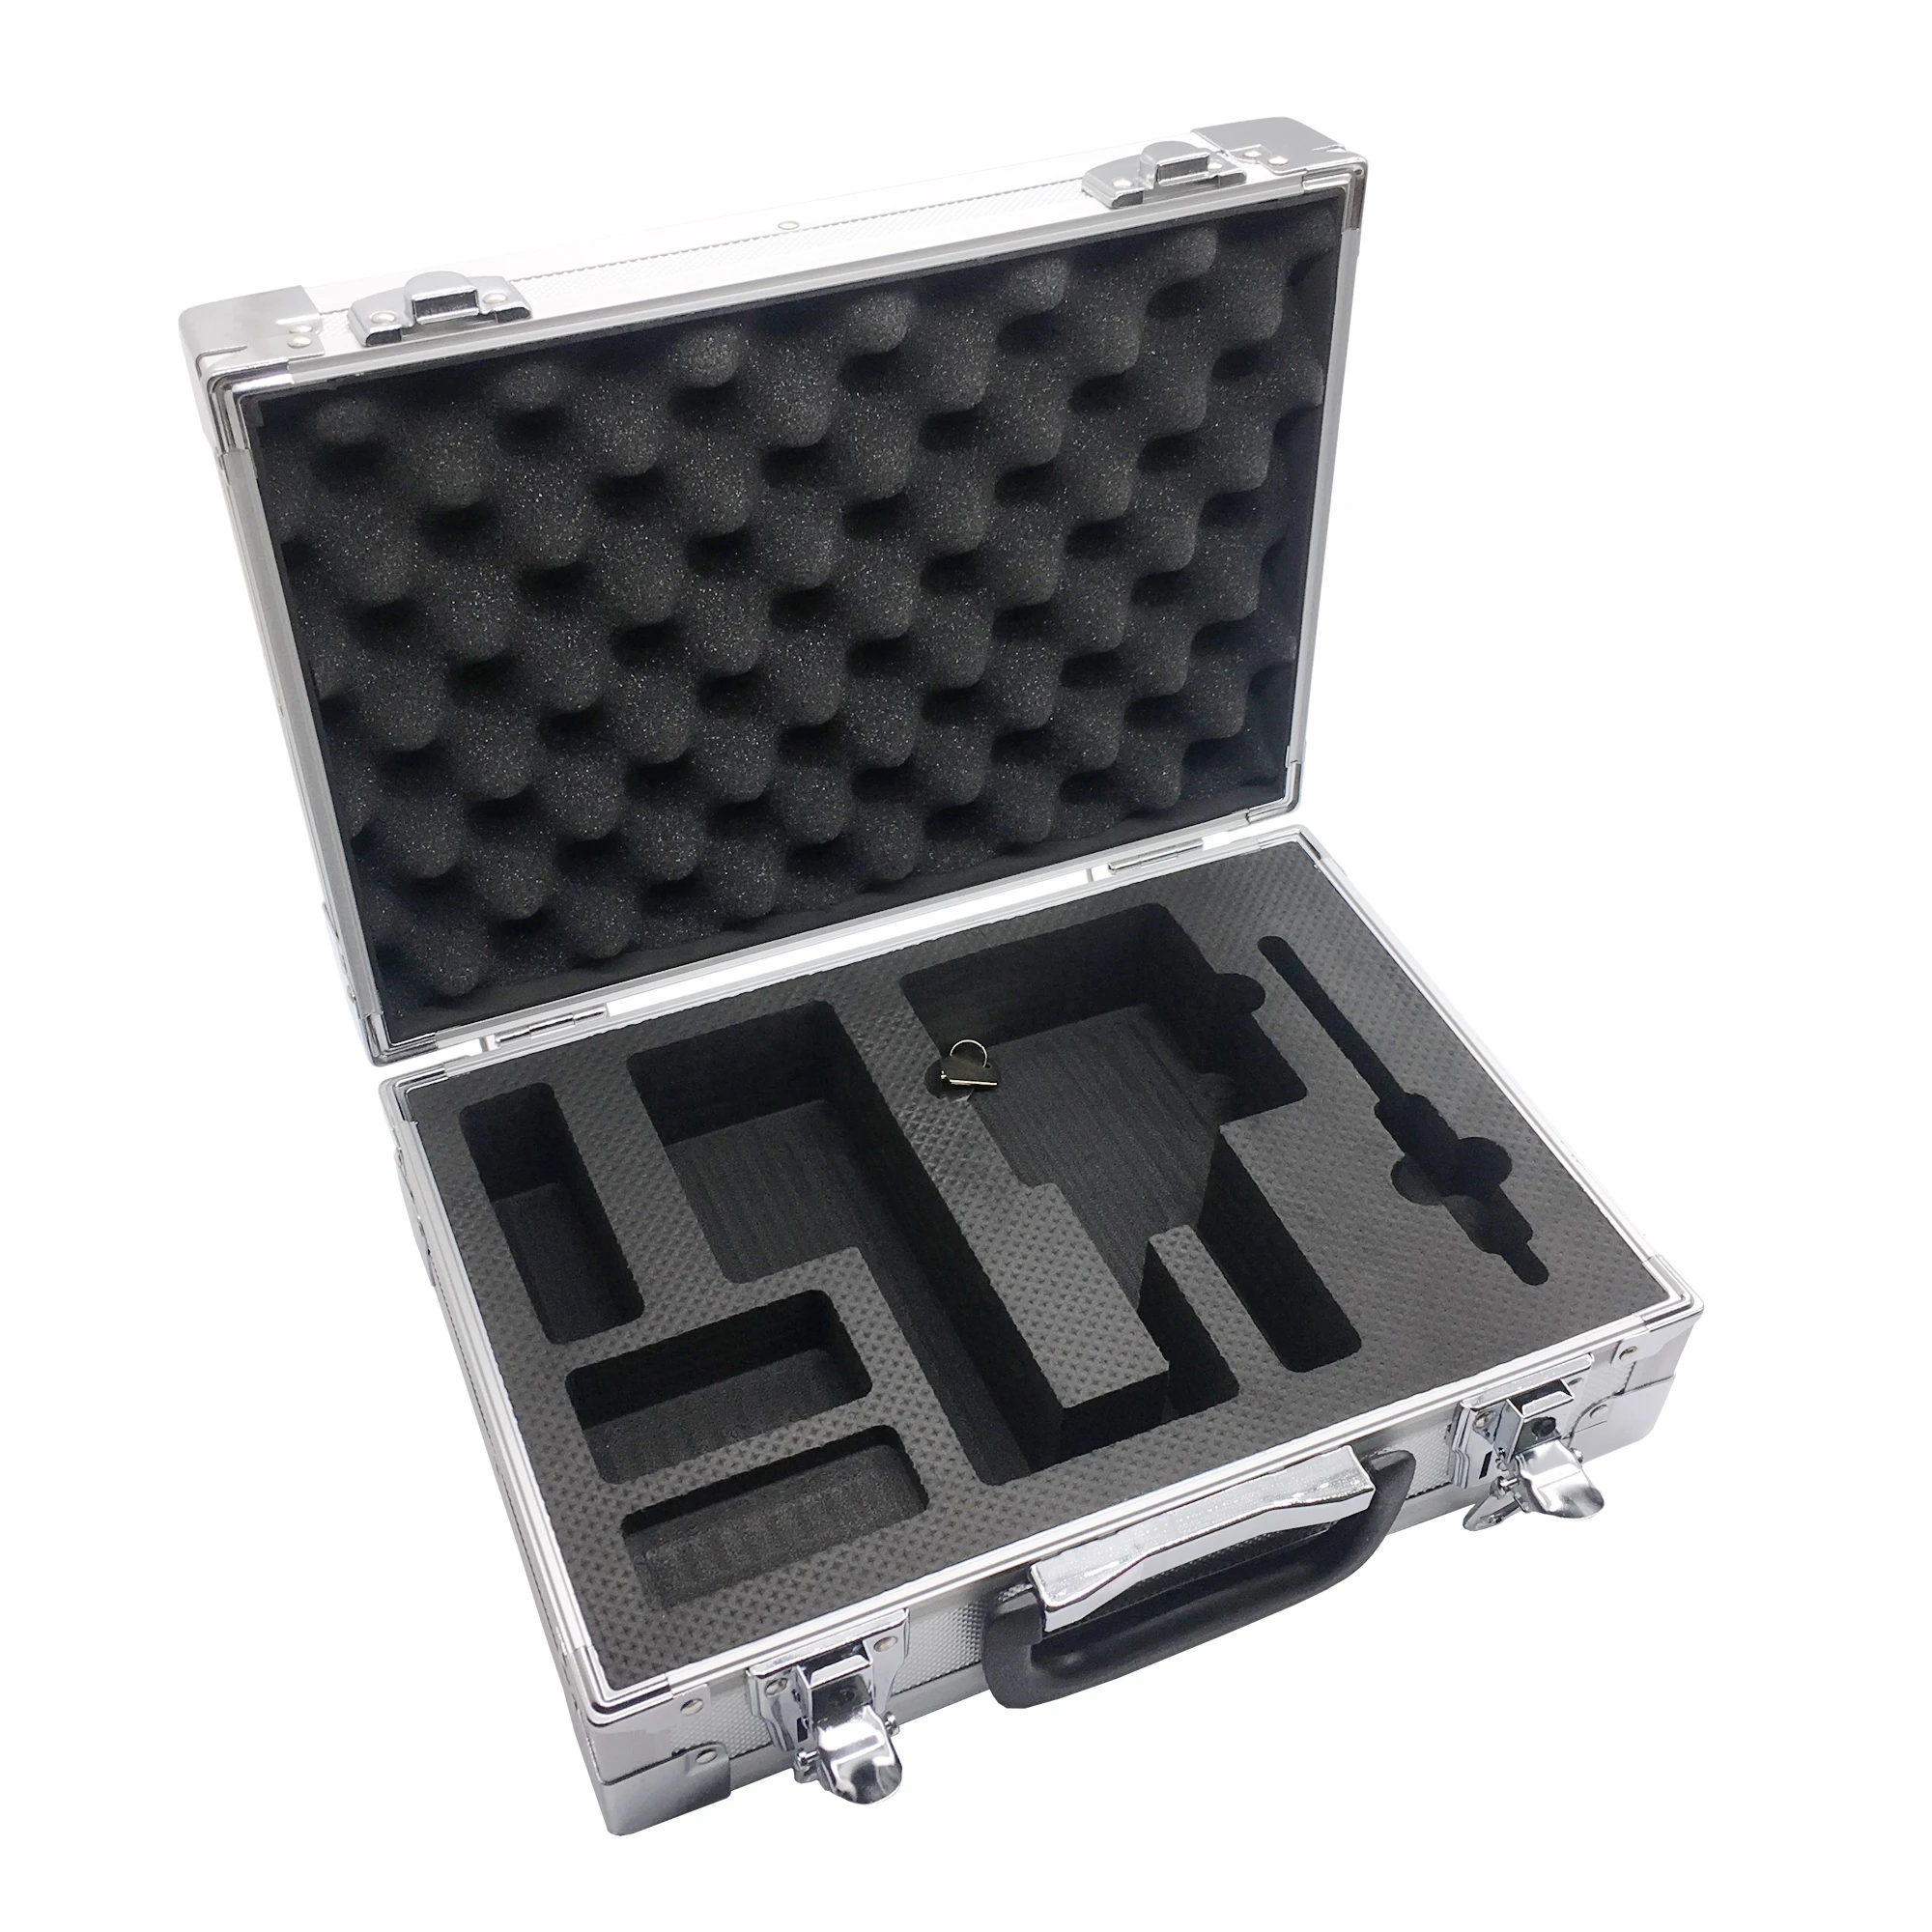 Aluminum Tool Socket Set Case High Quality Hard Case Aluminum Tool Box With Foam